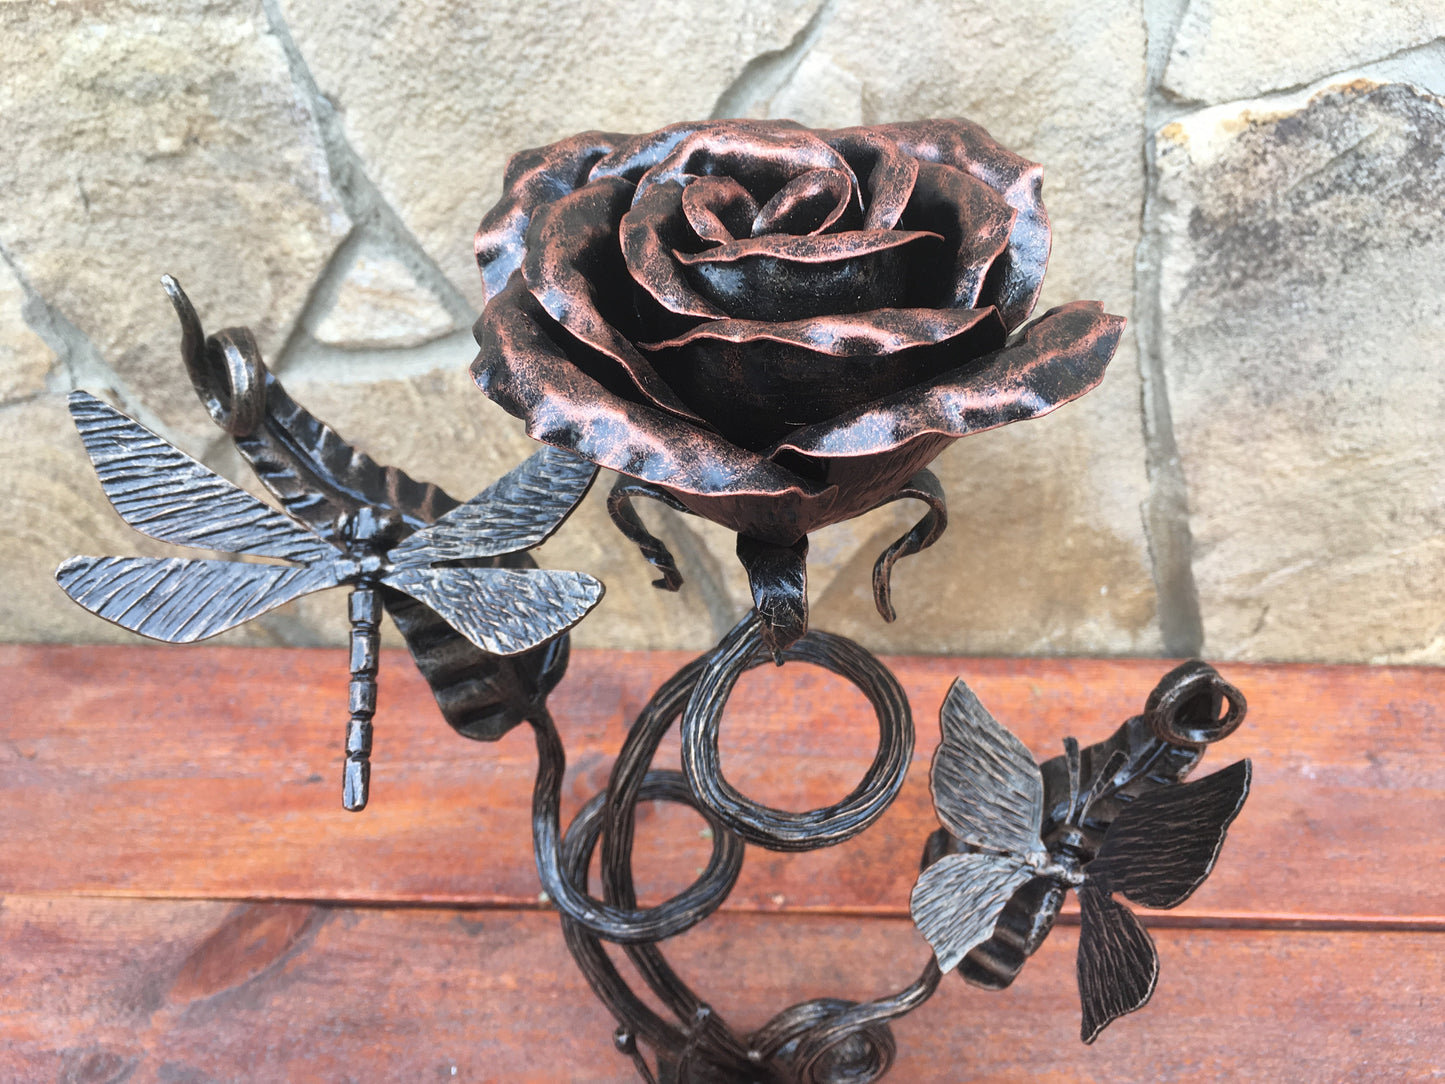 Iron sculpture, iron rose, wedding anniversary gift,iron anniversary gift,wedding gift,Mother's day,Valentine's day gift, iron gift for her